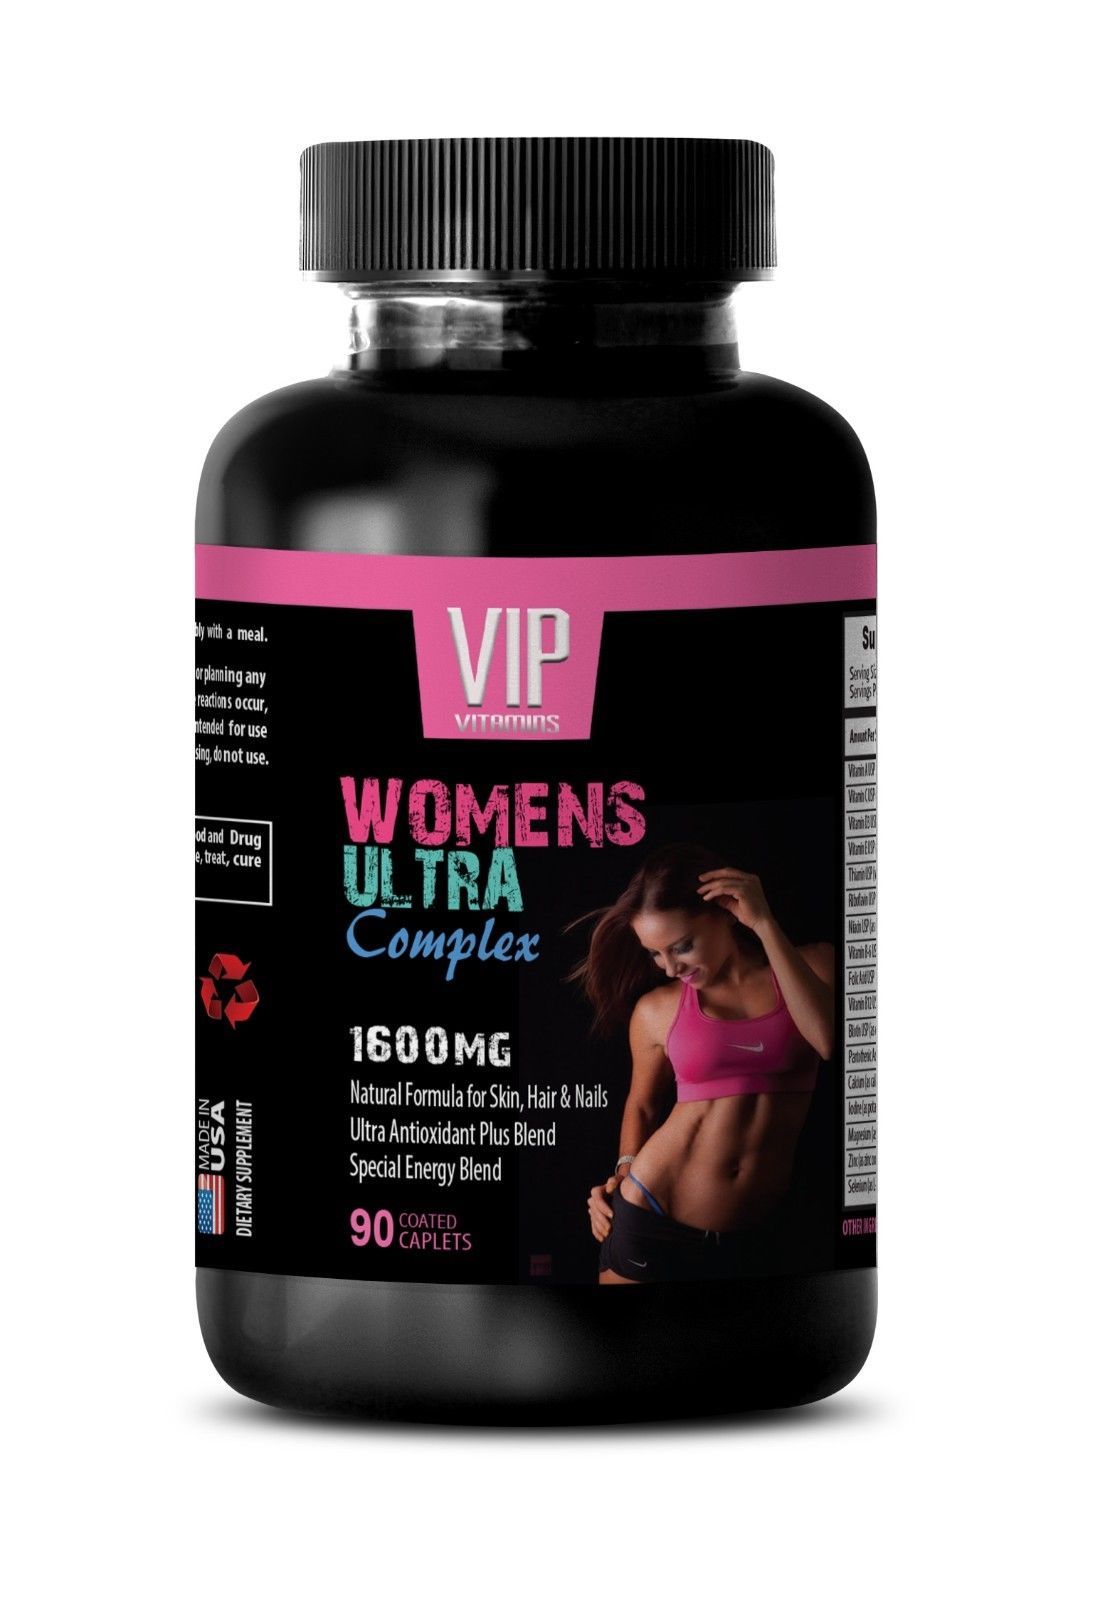 Essential health. Витамины woman Complex+. Wellness Formula. Libido fem отзывы. Vitamins to Boost women's libido.